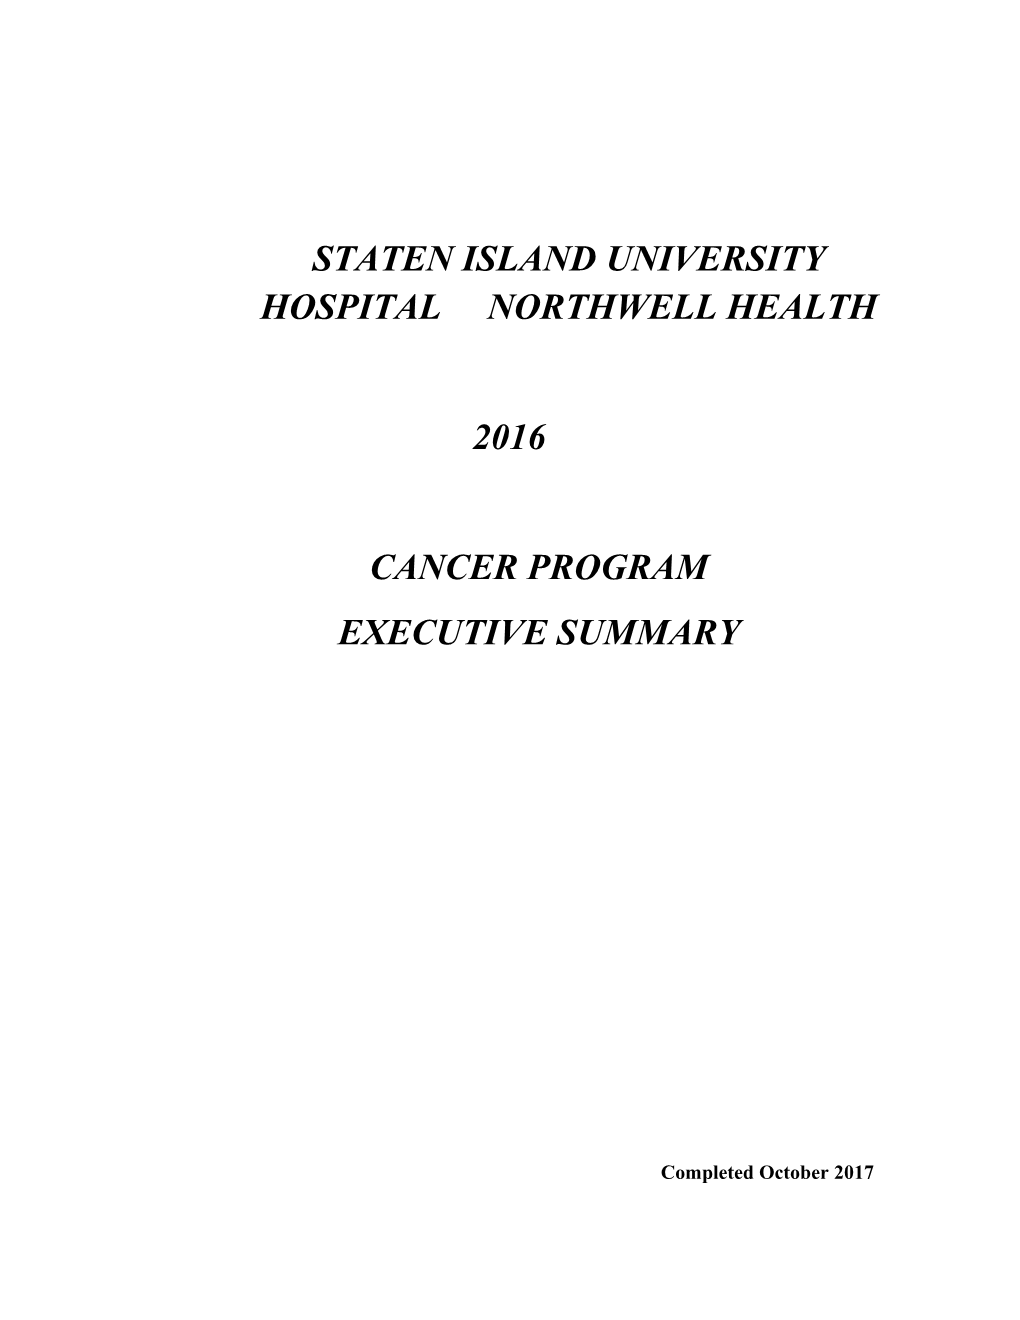 Staten Island University Hospital Northwell Health